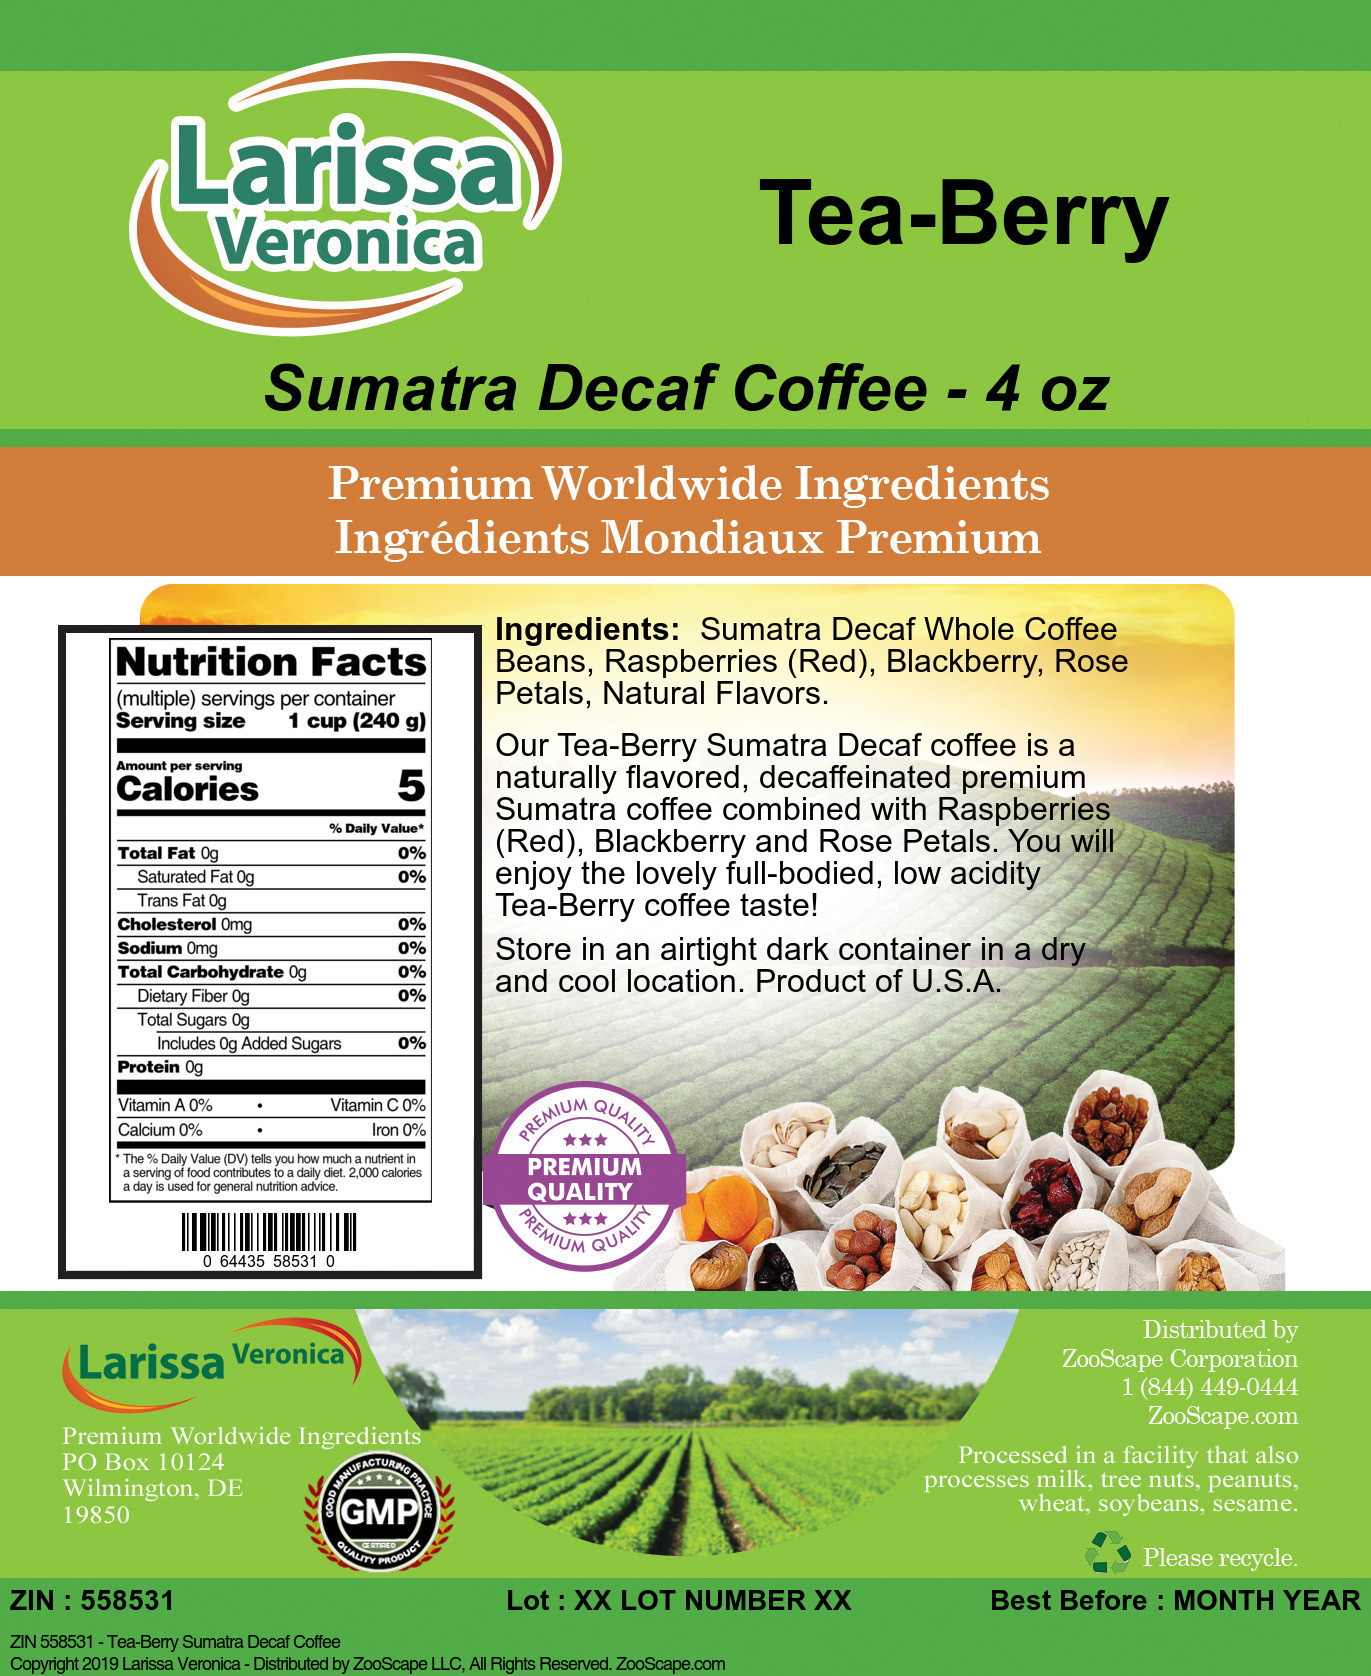 Tea-Berry Sumatra Decaf Coffee - Label